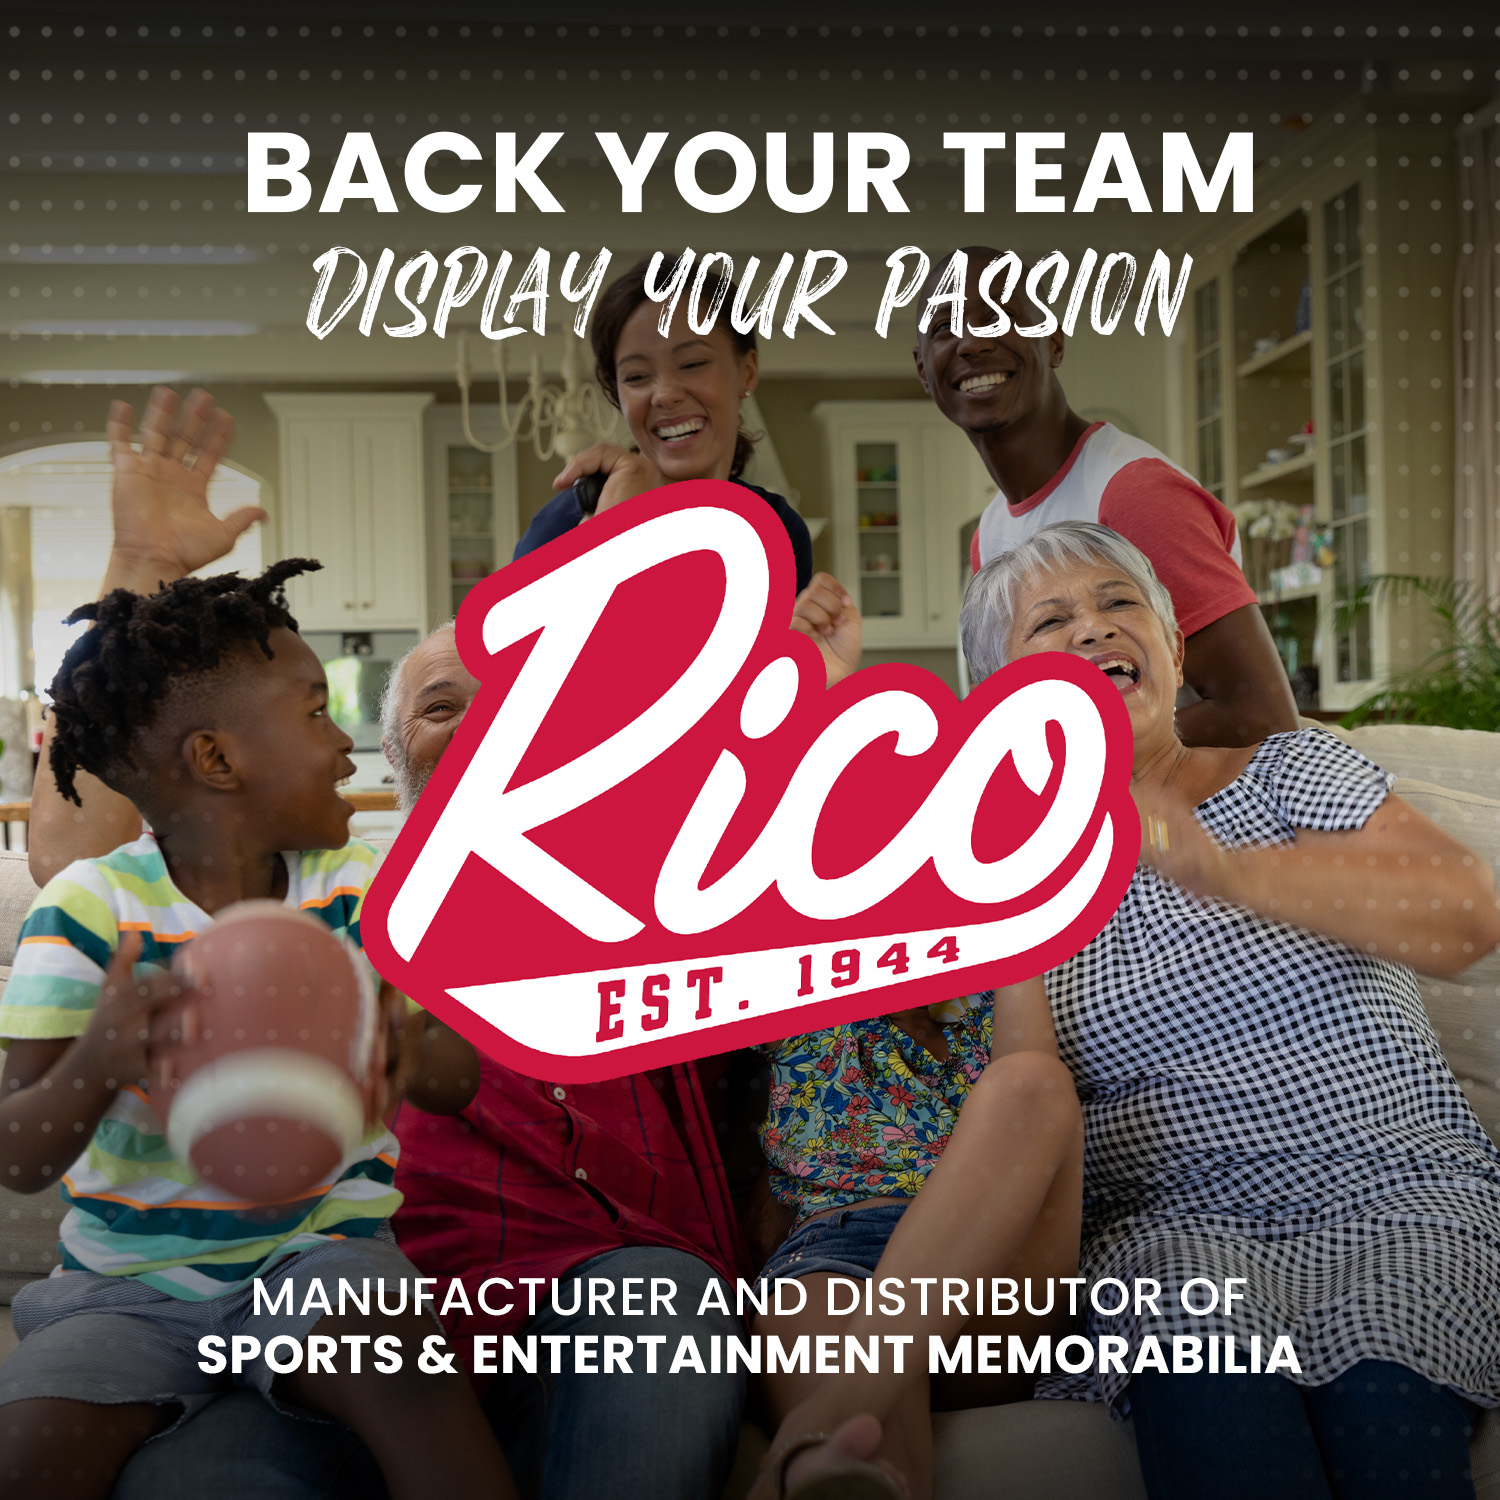 Rico NFL Rico Industries Los Angeles Rams  Soft Felt 12X30 Pennant W/ Header Card